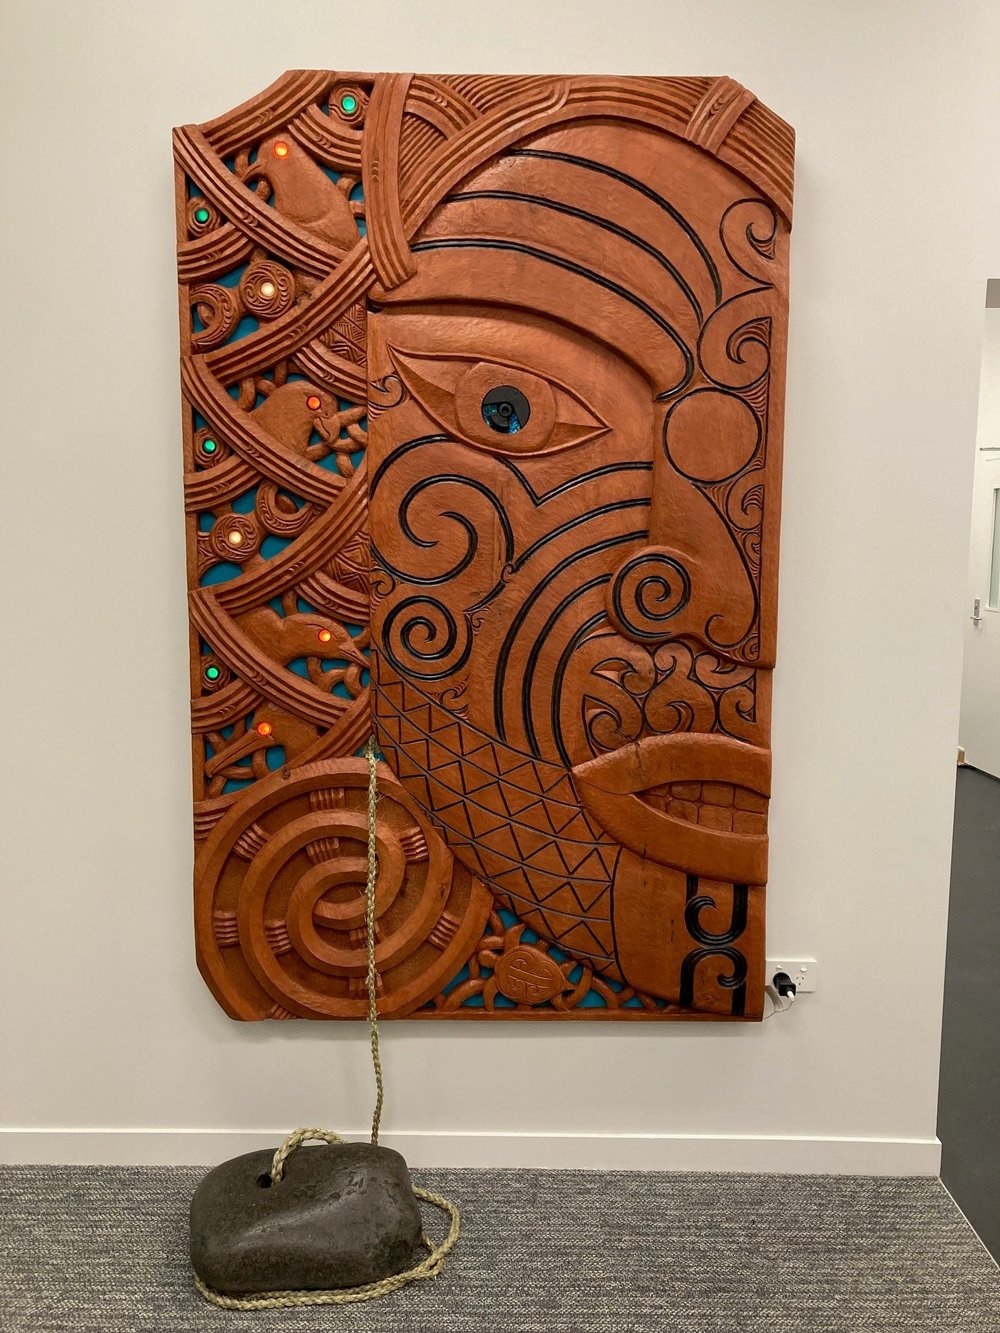 Te kupenga arorangi - a new whakairo within the control centre by artist Alex Whitaker